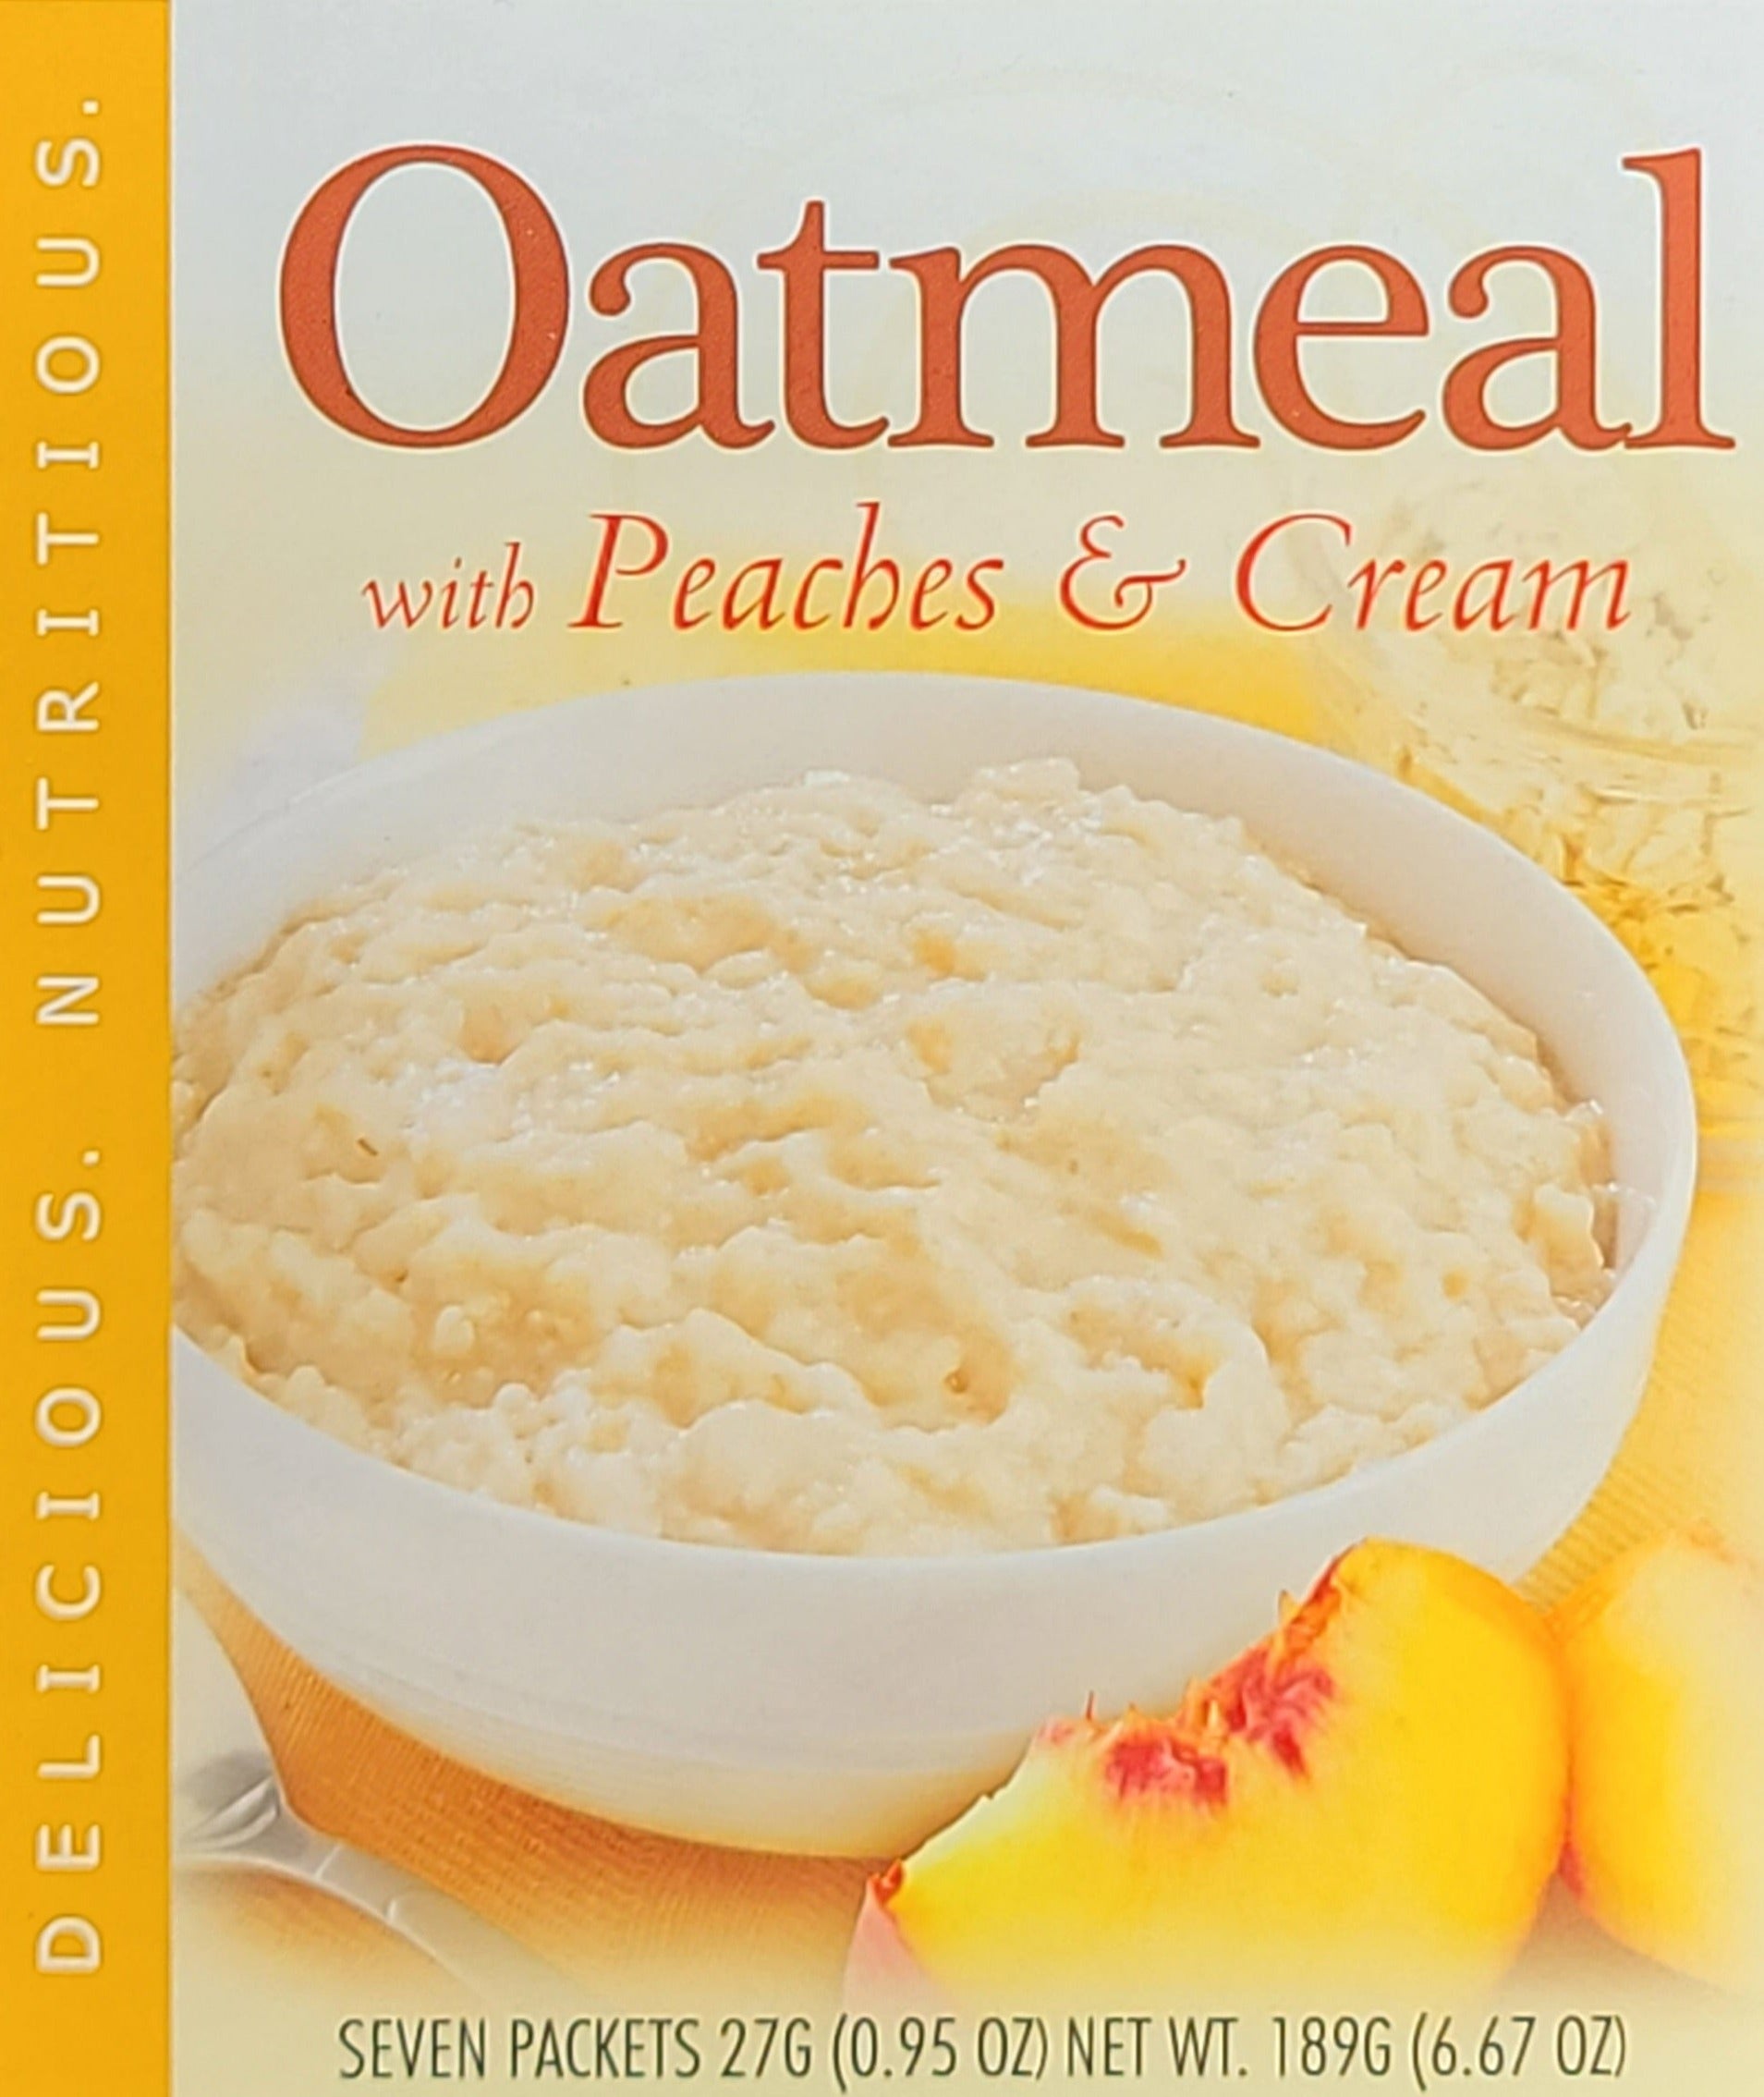 Peaches & Cream Oatmeal